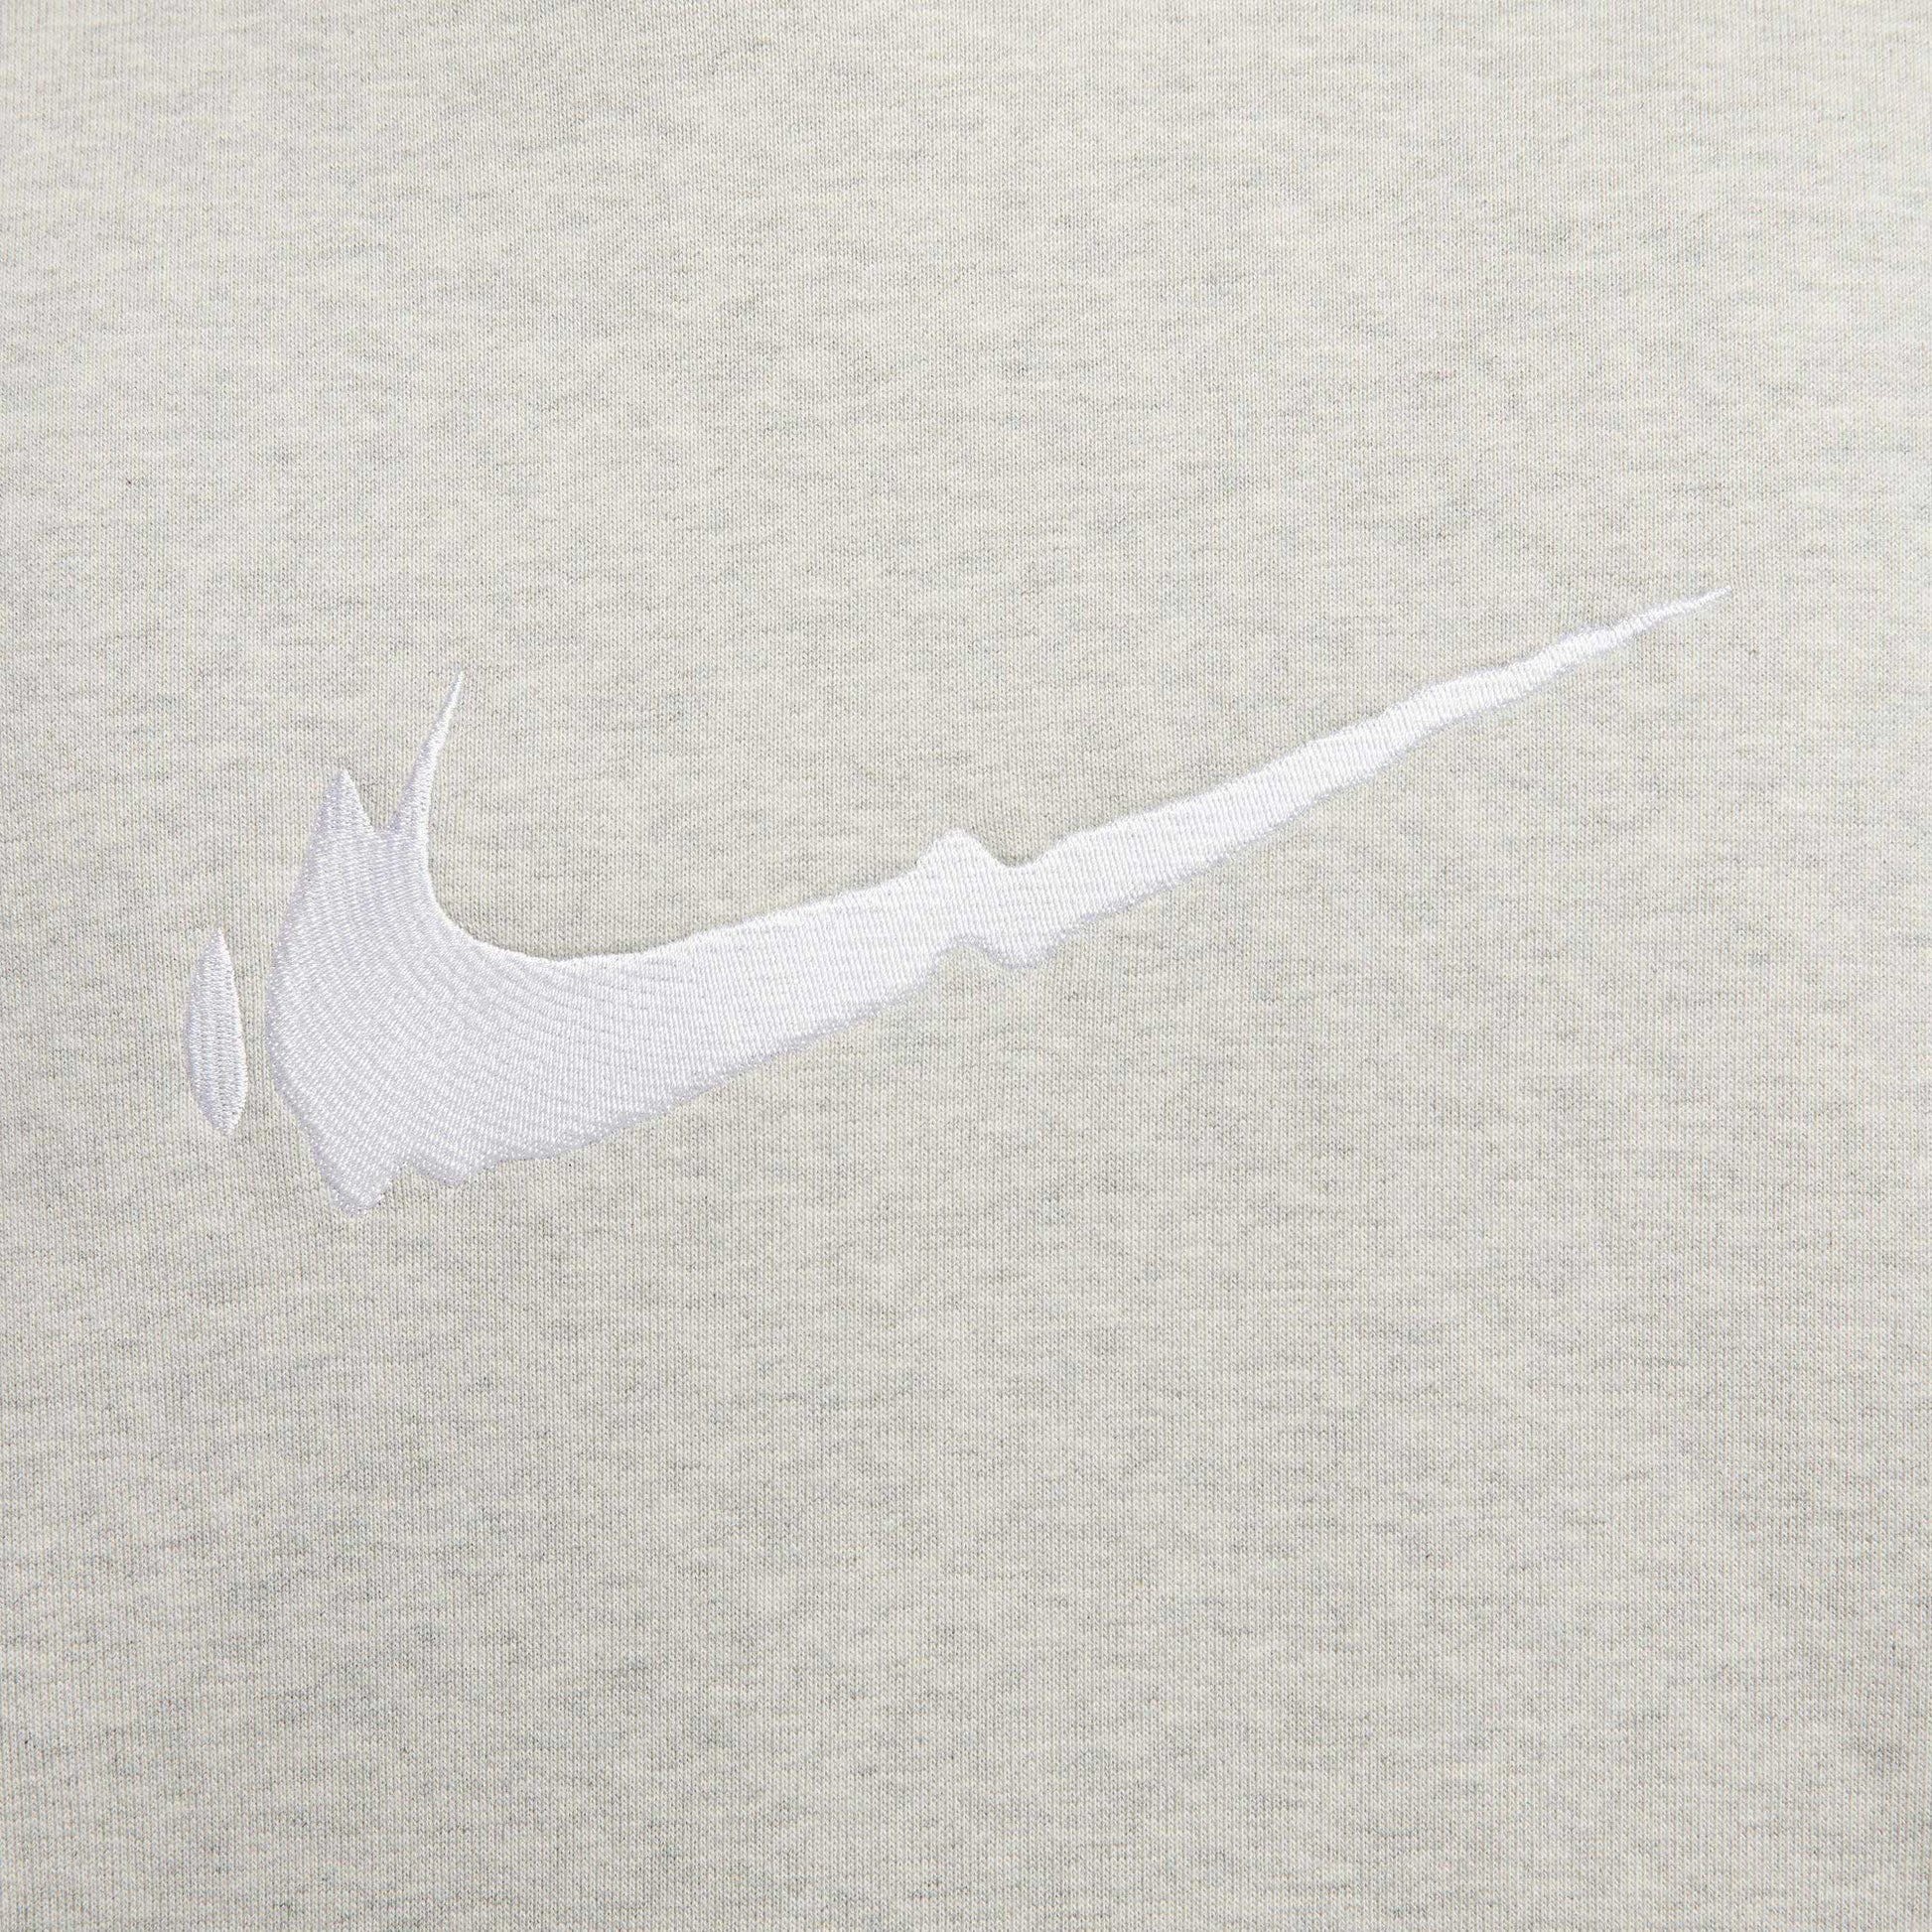 Nike SB Copy Shop Swoosh Skate Hoodie, grey heather - Tiki Room Skateboards - 5